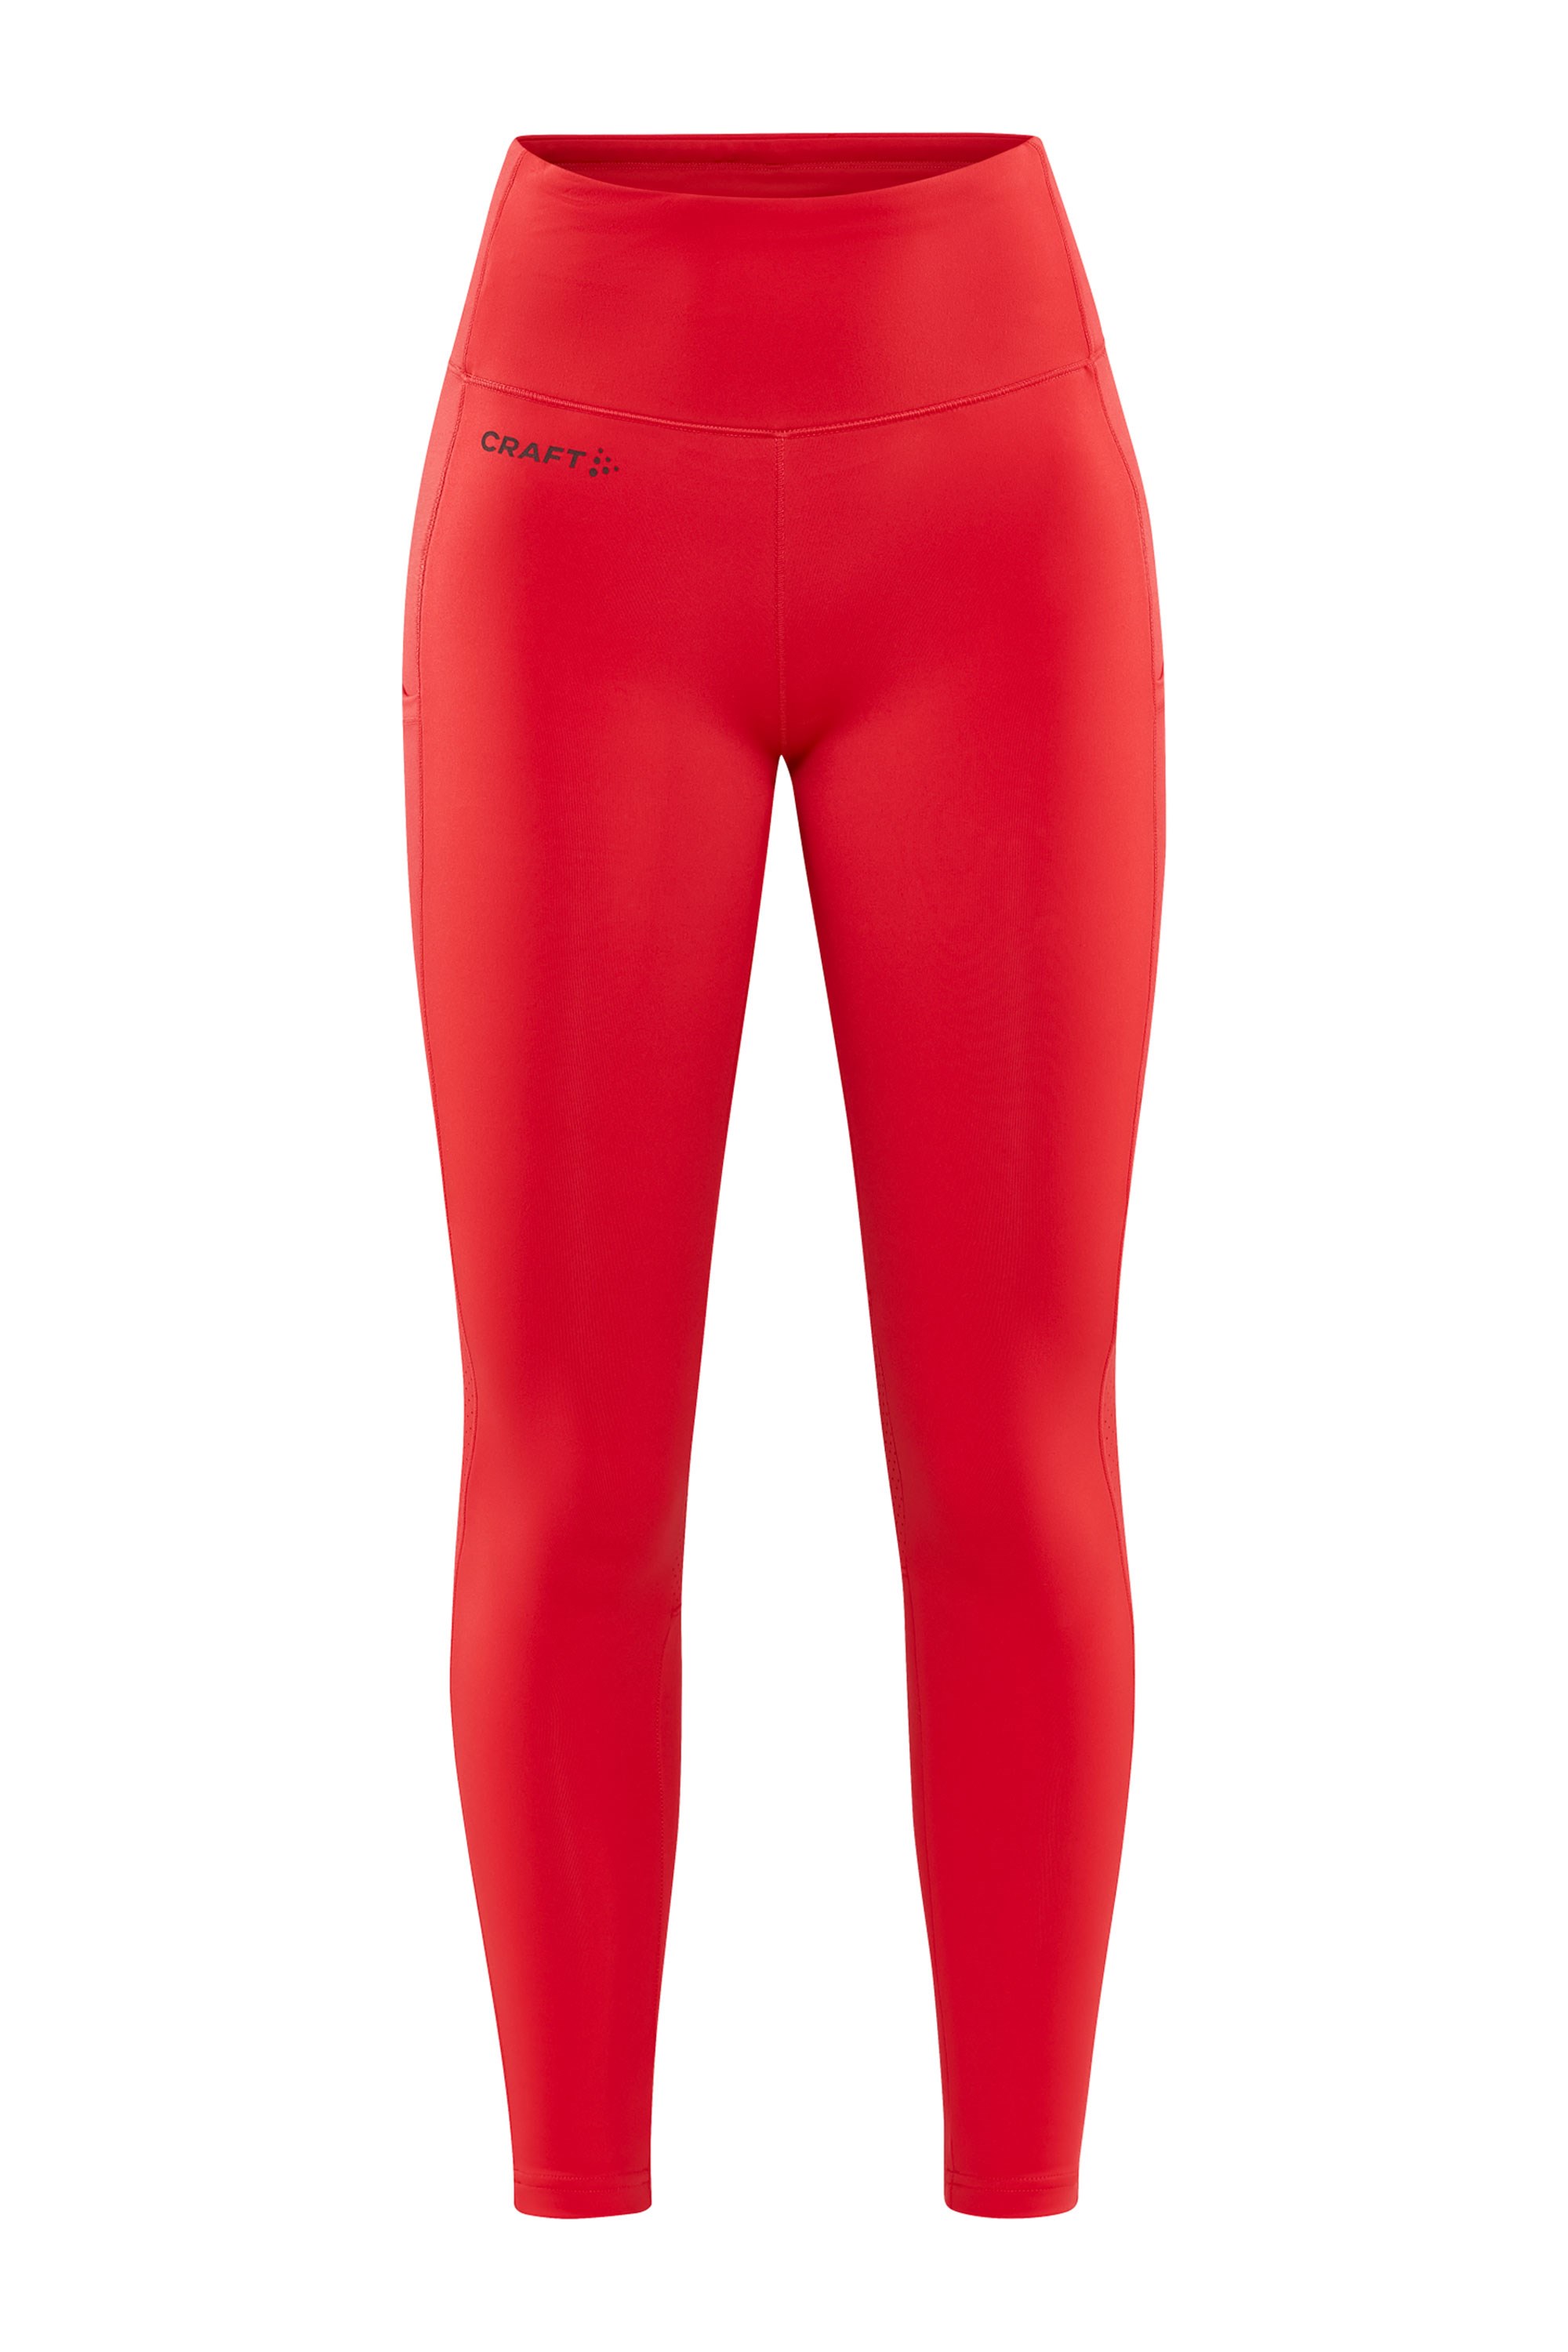 SOFT SURROUNDINGS COLORFUL Metro Leggings Poppy Red Women's Size Medium  $22.33 - PicClick